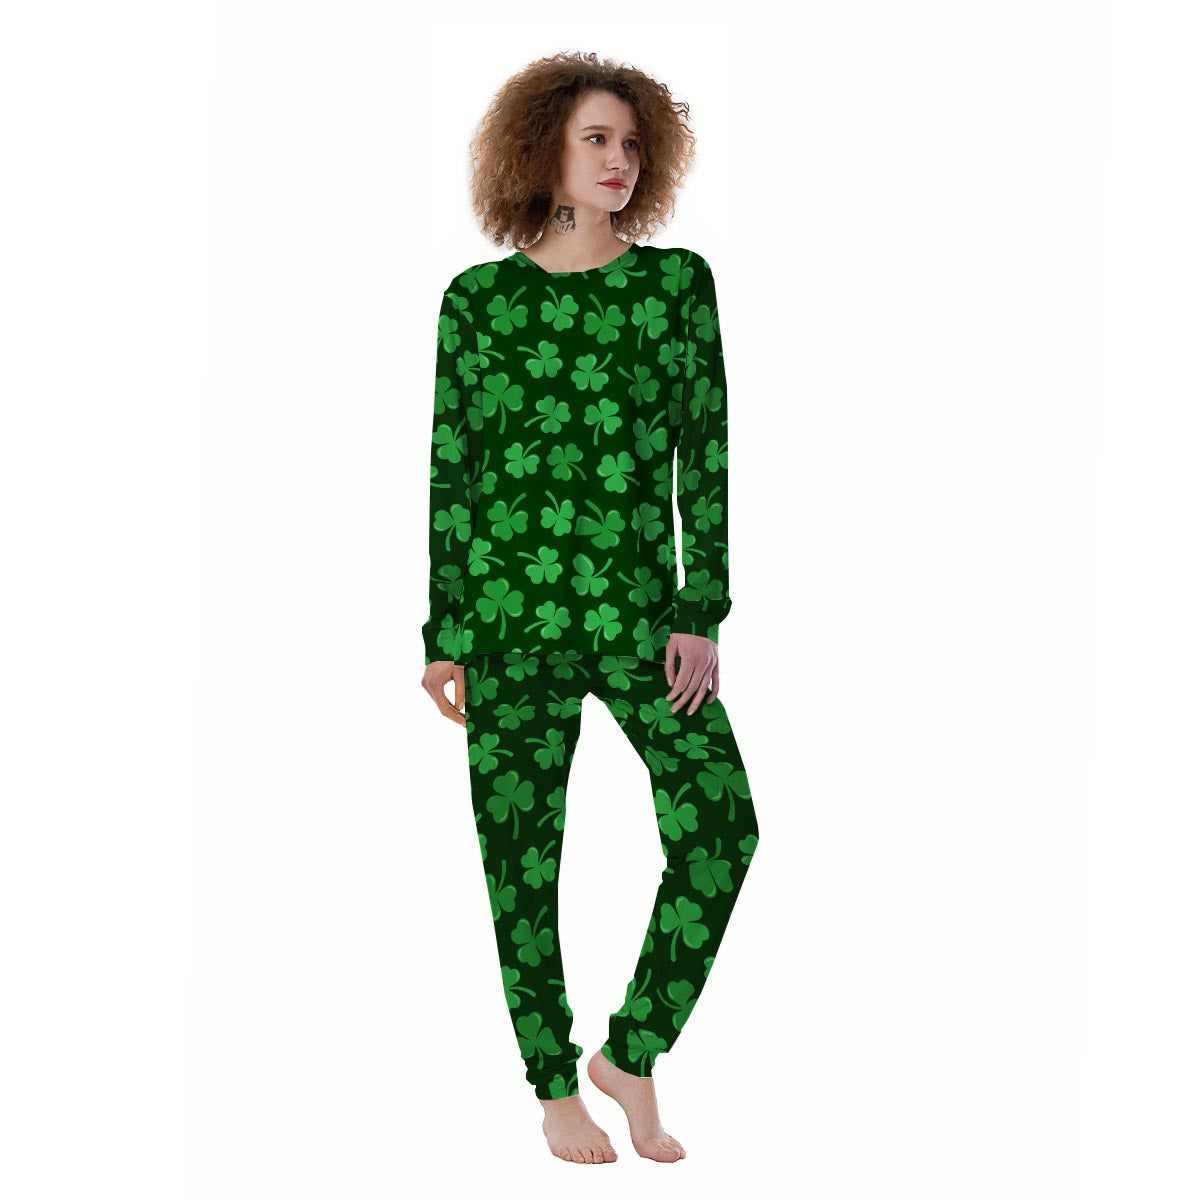 Love Shamrock Green Plaid St Patrick's Day Pajamas - Kids, Adults